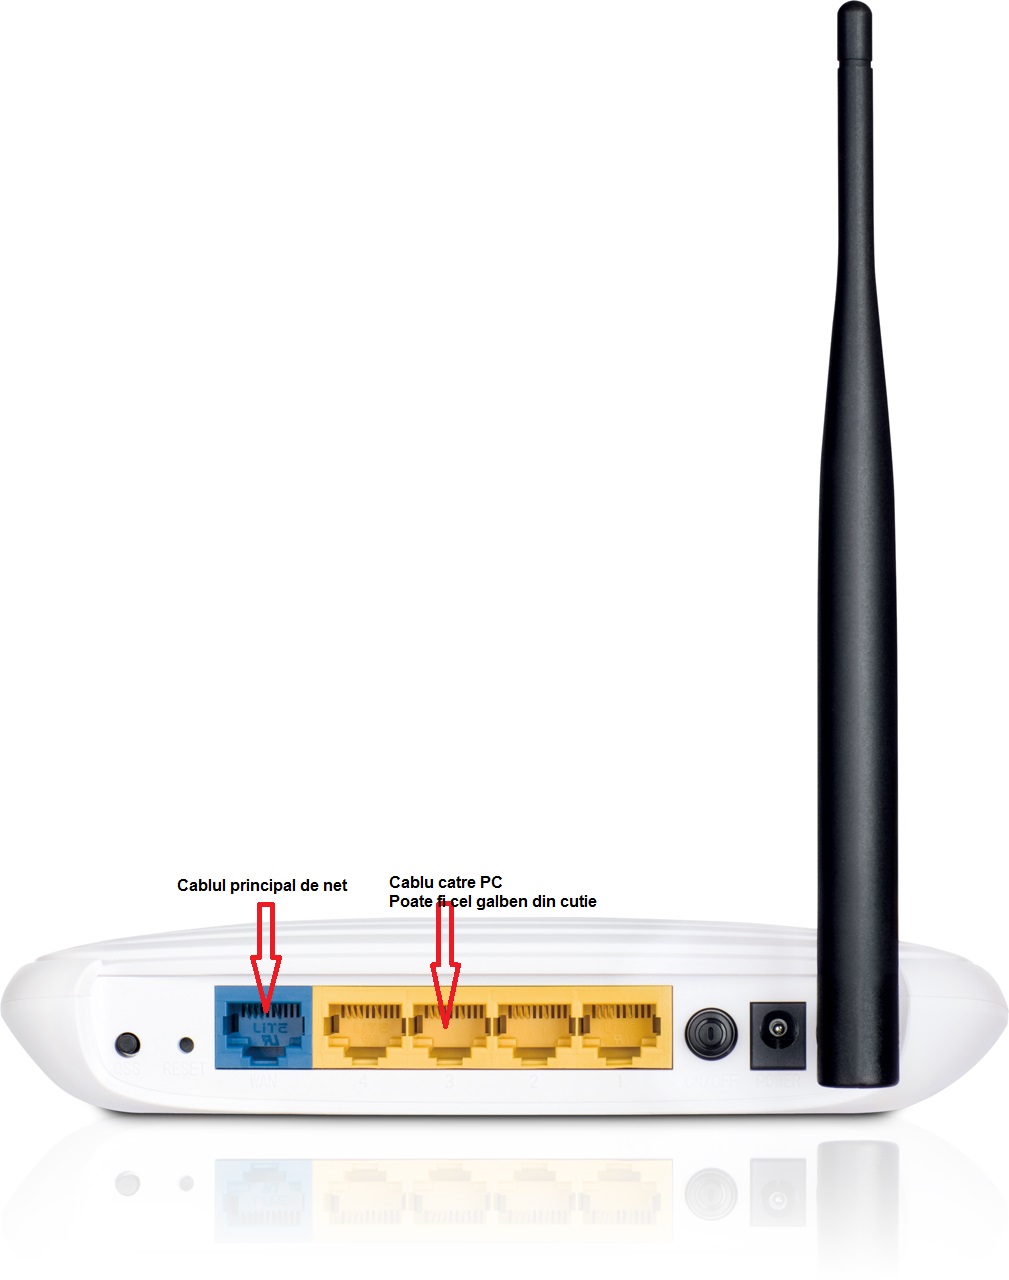 boom pleasant profile Configurare setare router tp link | Setari Router, PC, Laptop, Tableta sau  Telefon